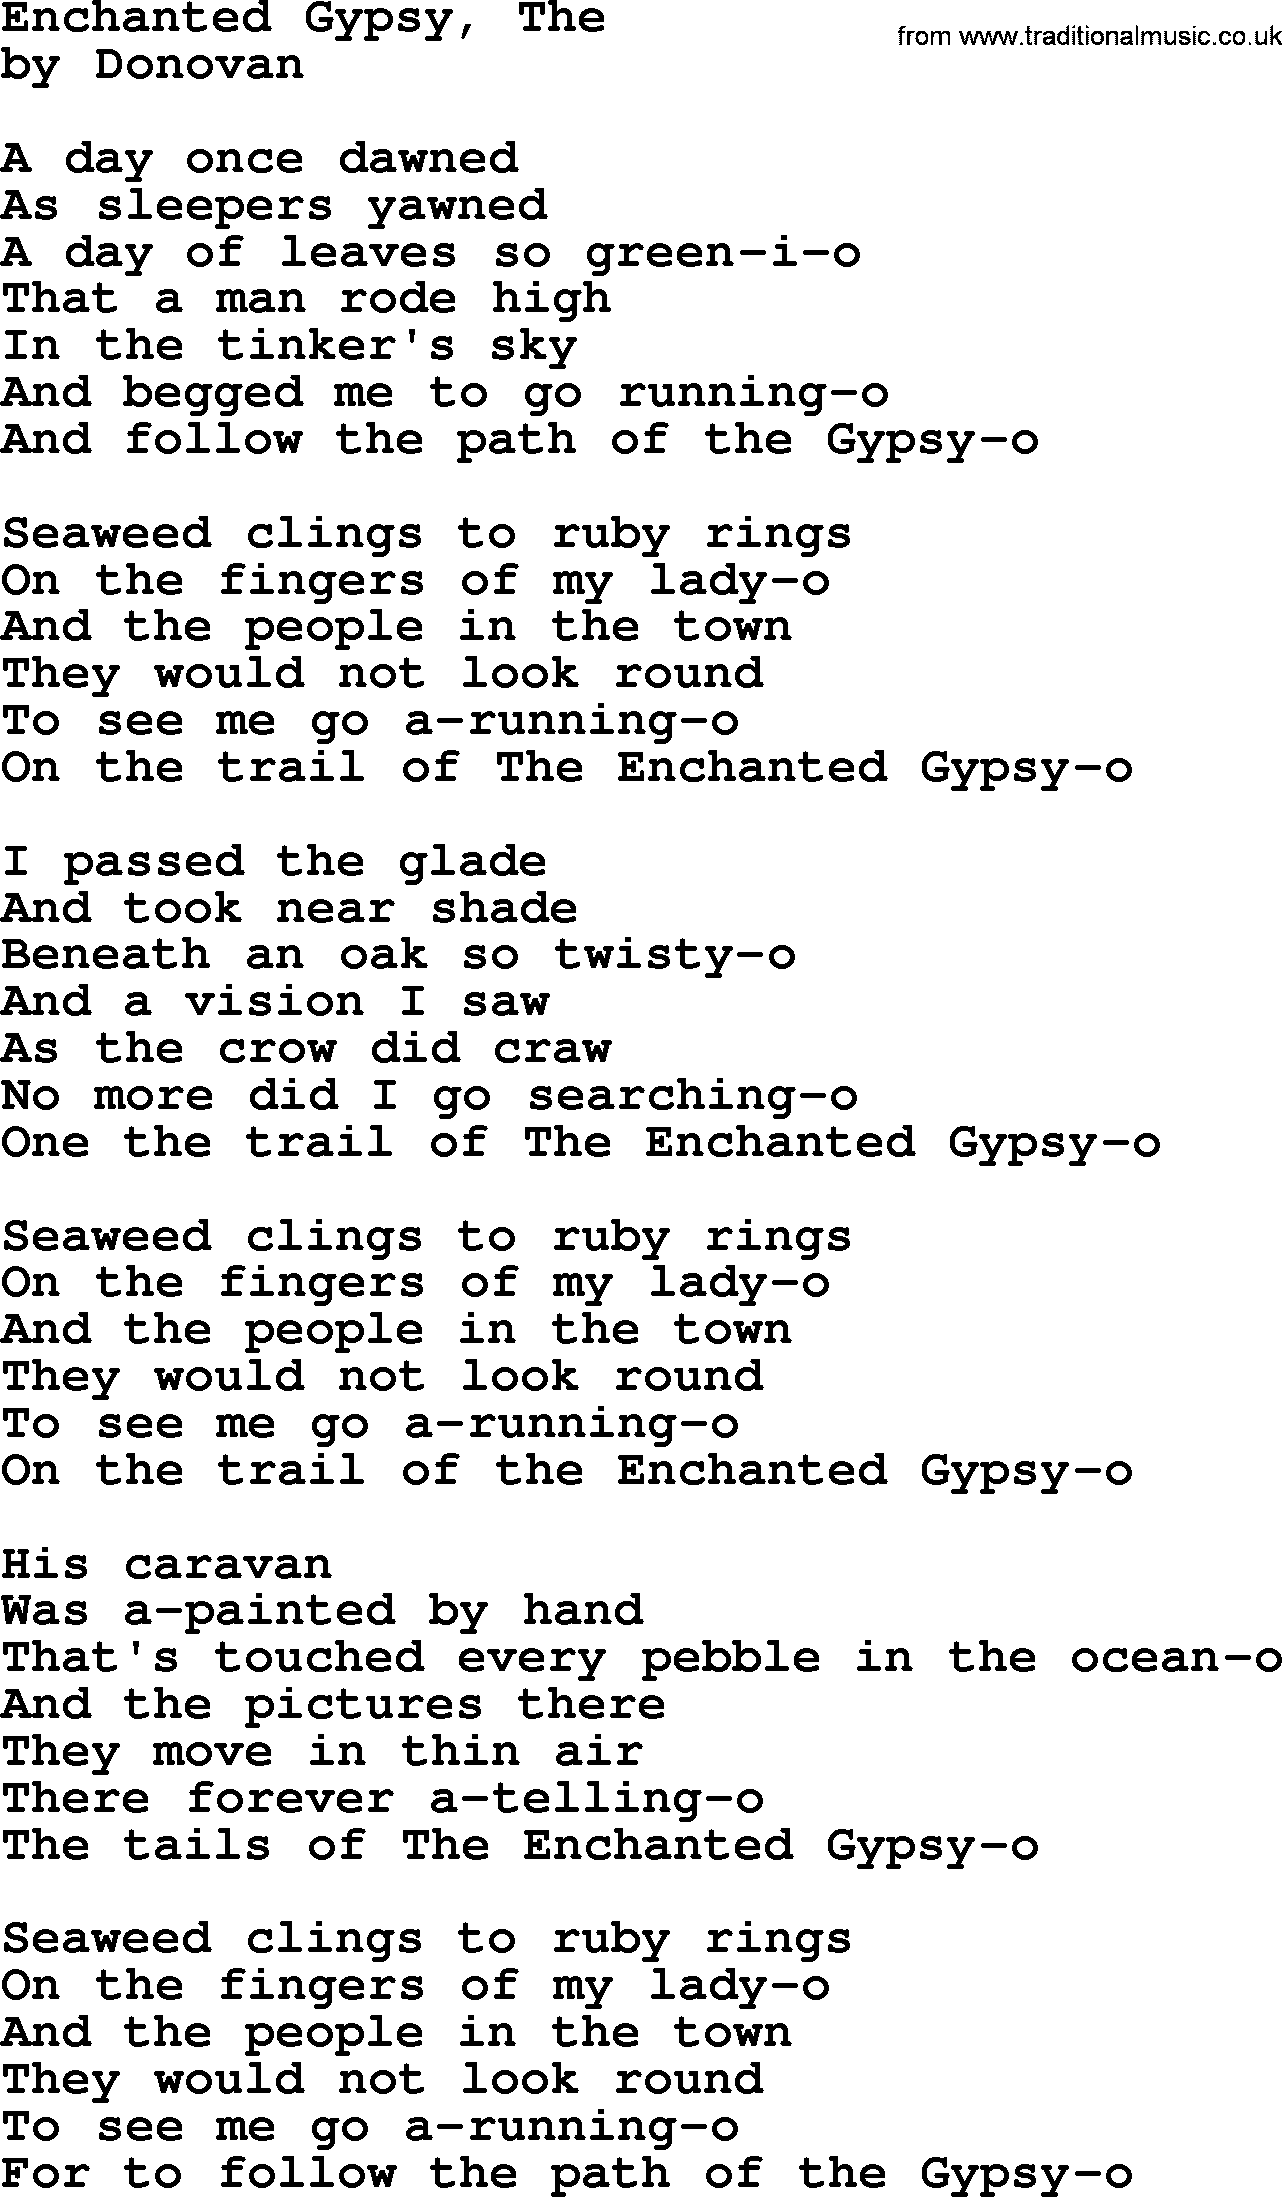 Donovan Leitch song: Enchanted Gypsy, The lyrics